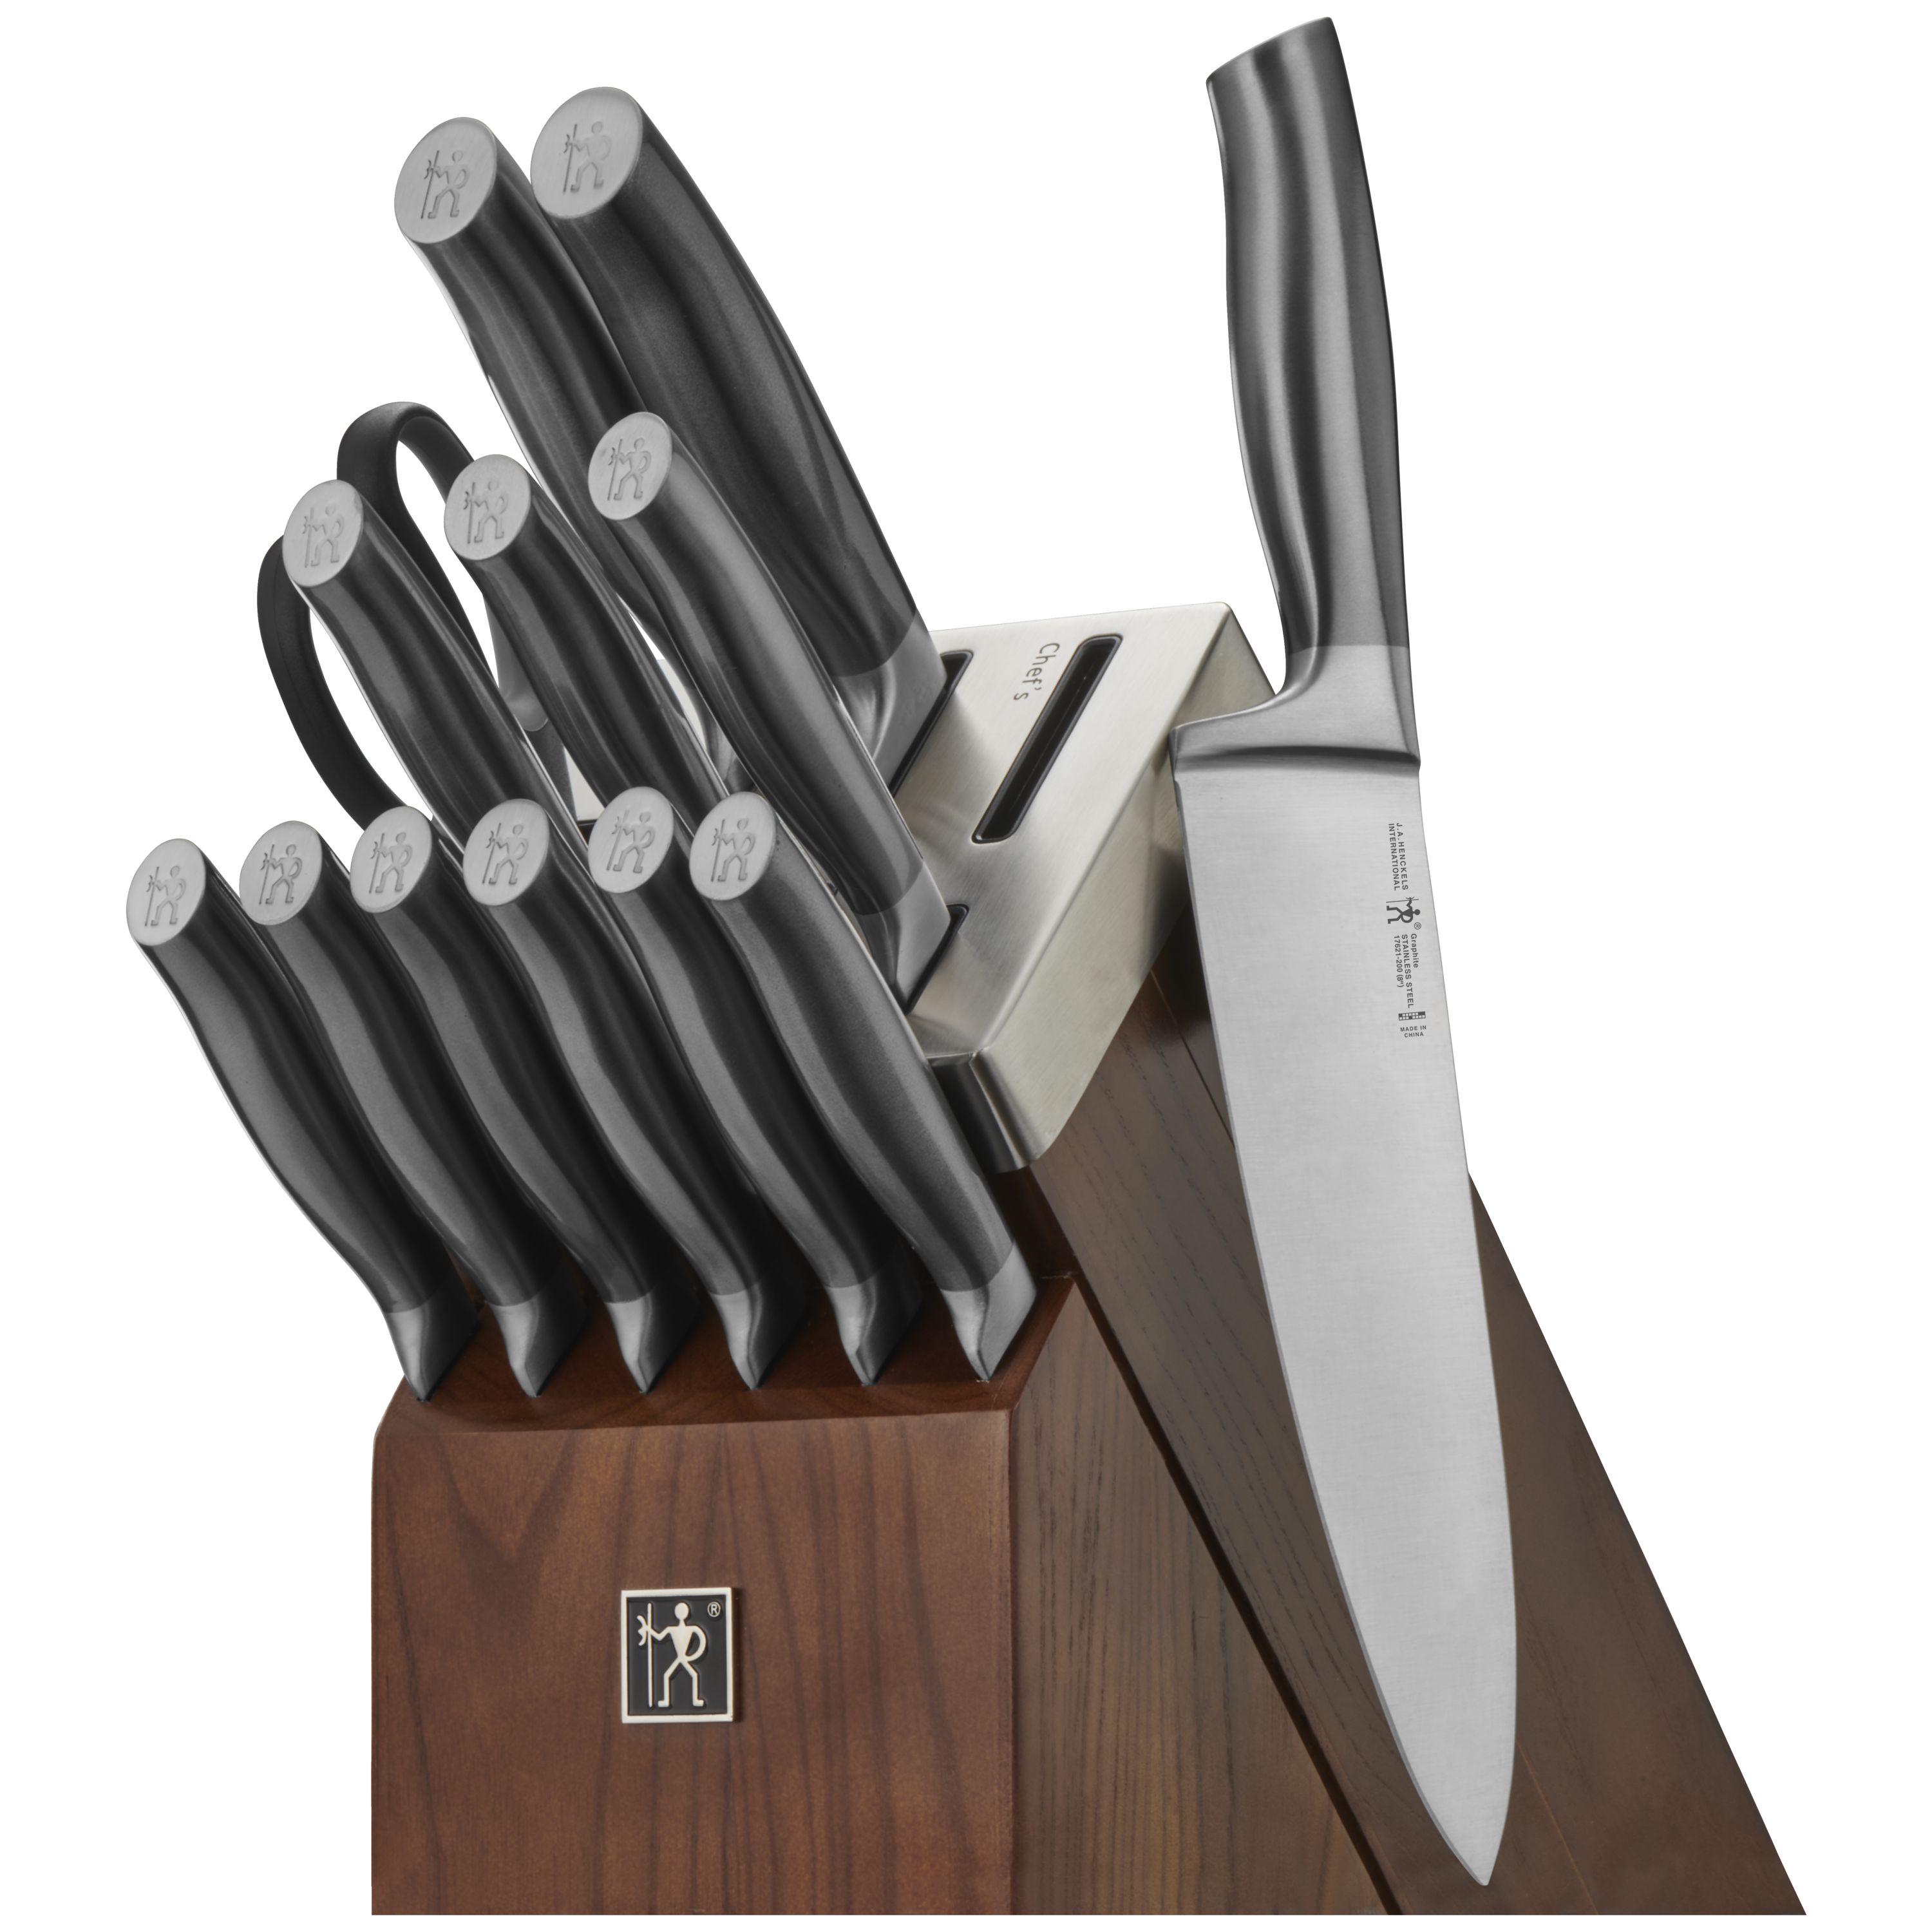 J.A. Henckels International Forged Premio 14-pc Knife Block Set